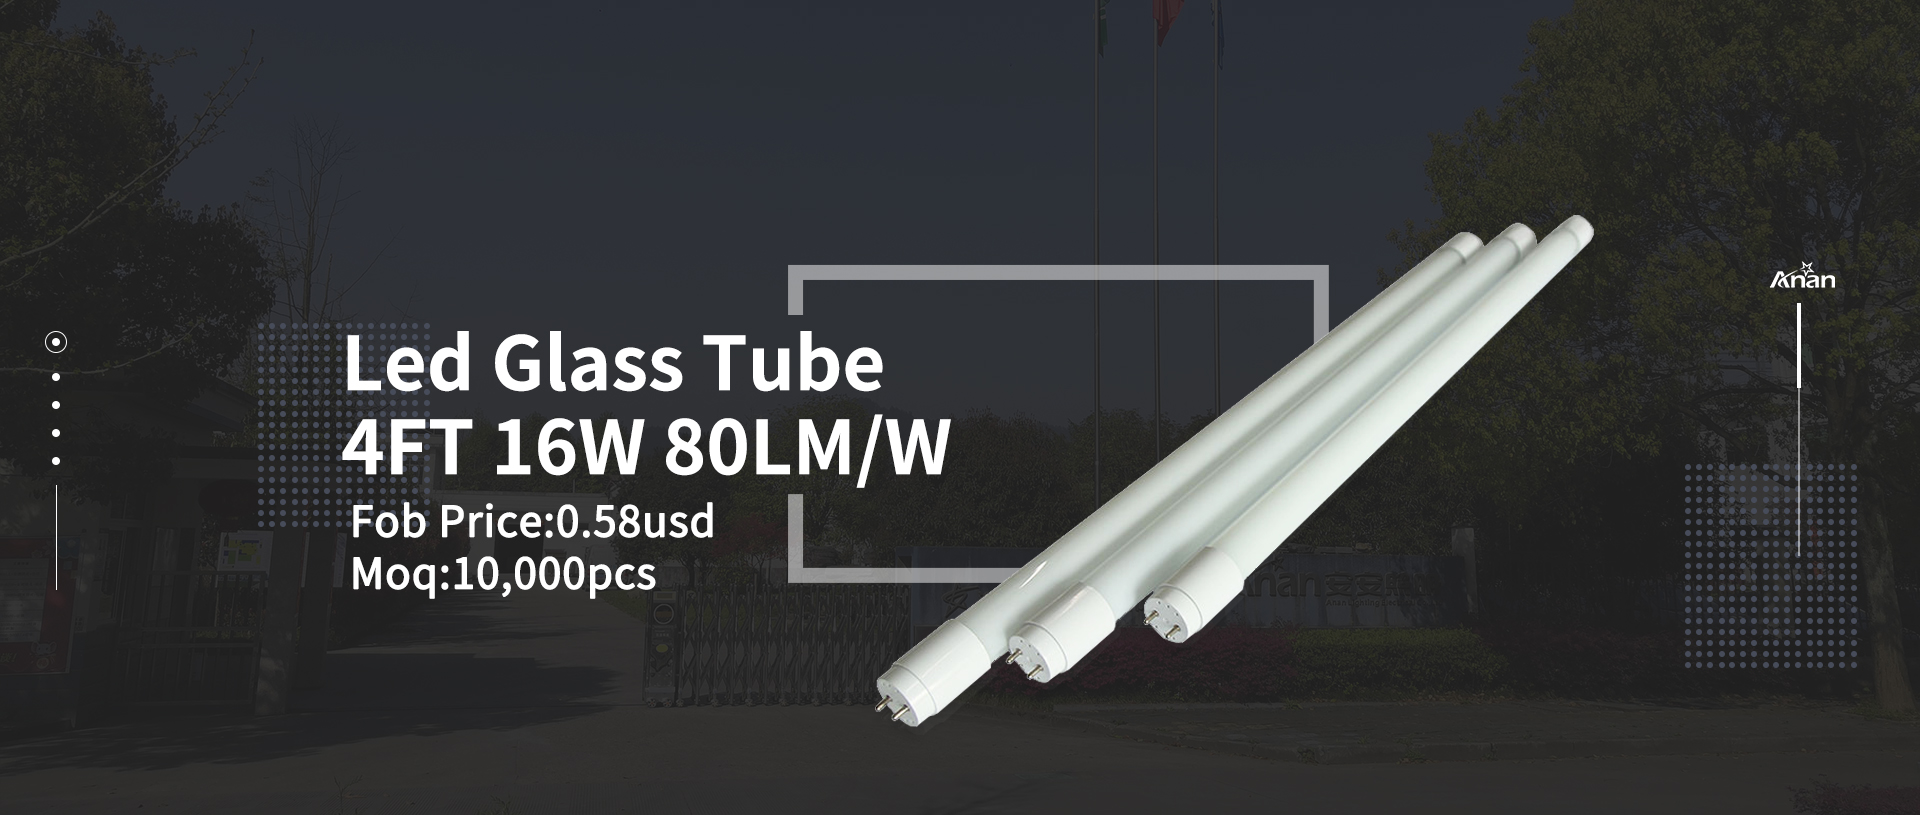 Banner de tubo led 16W